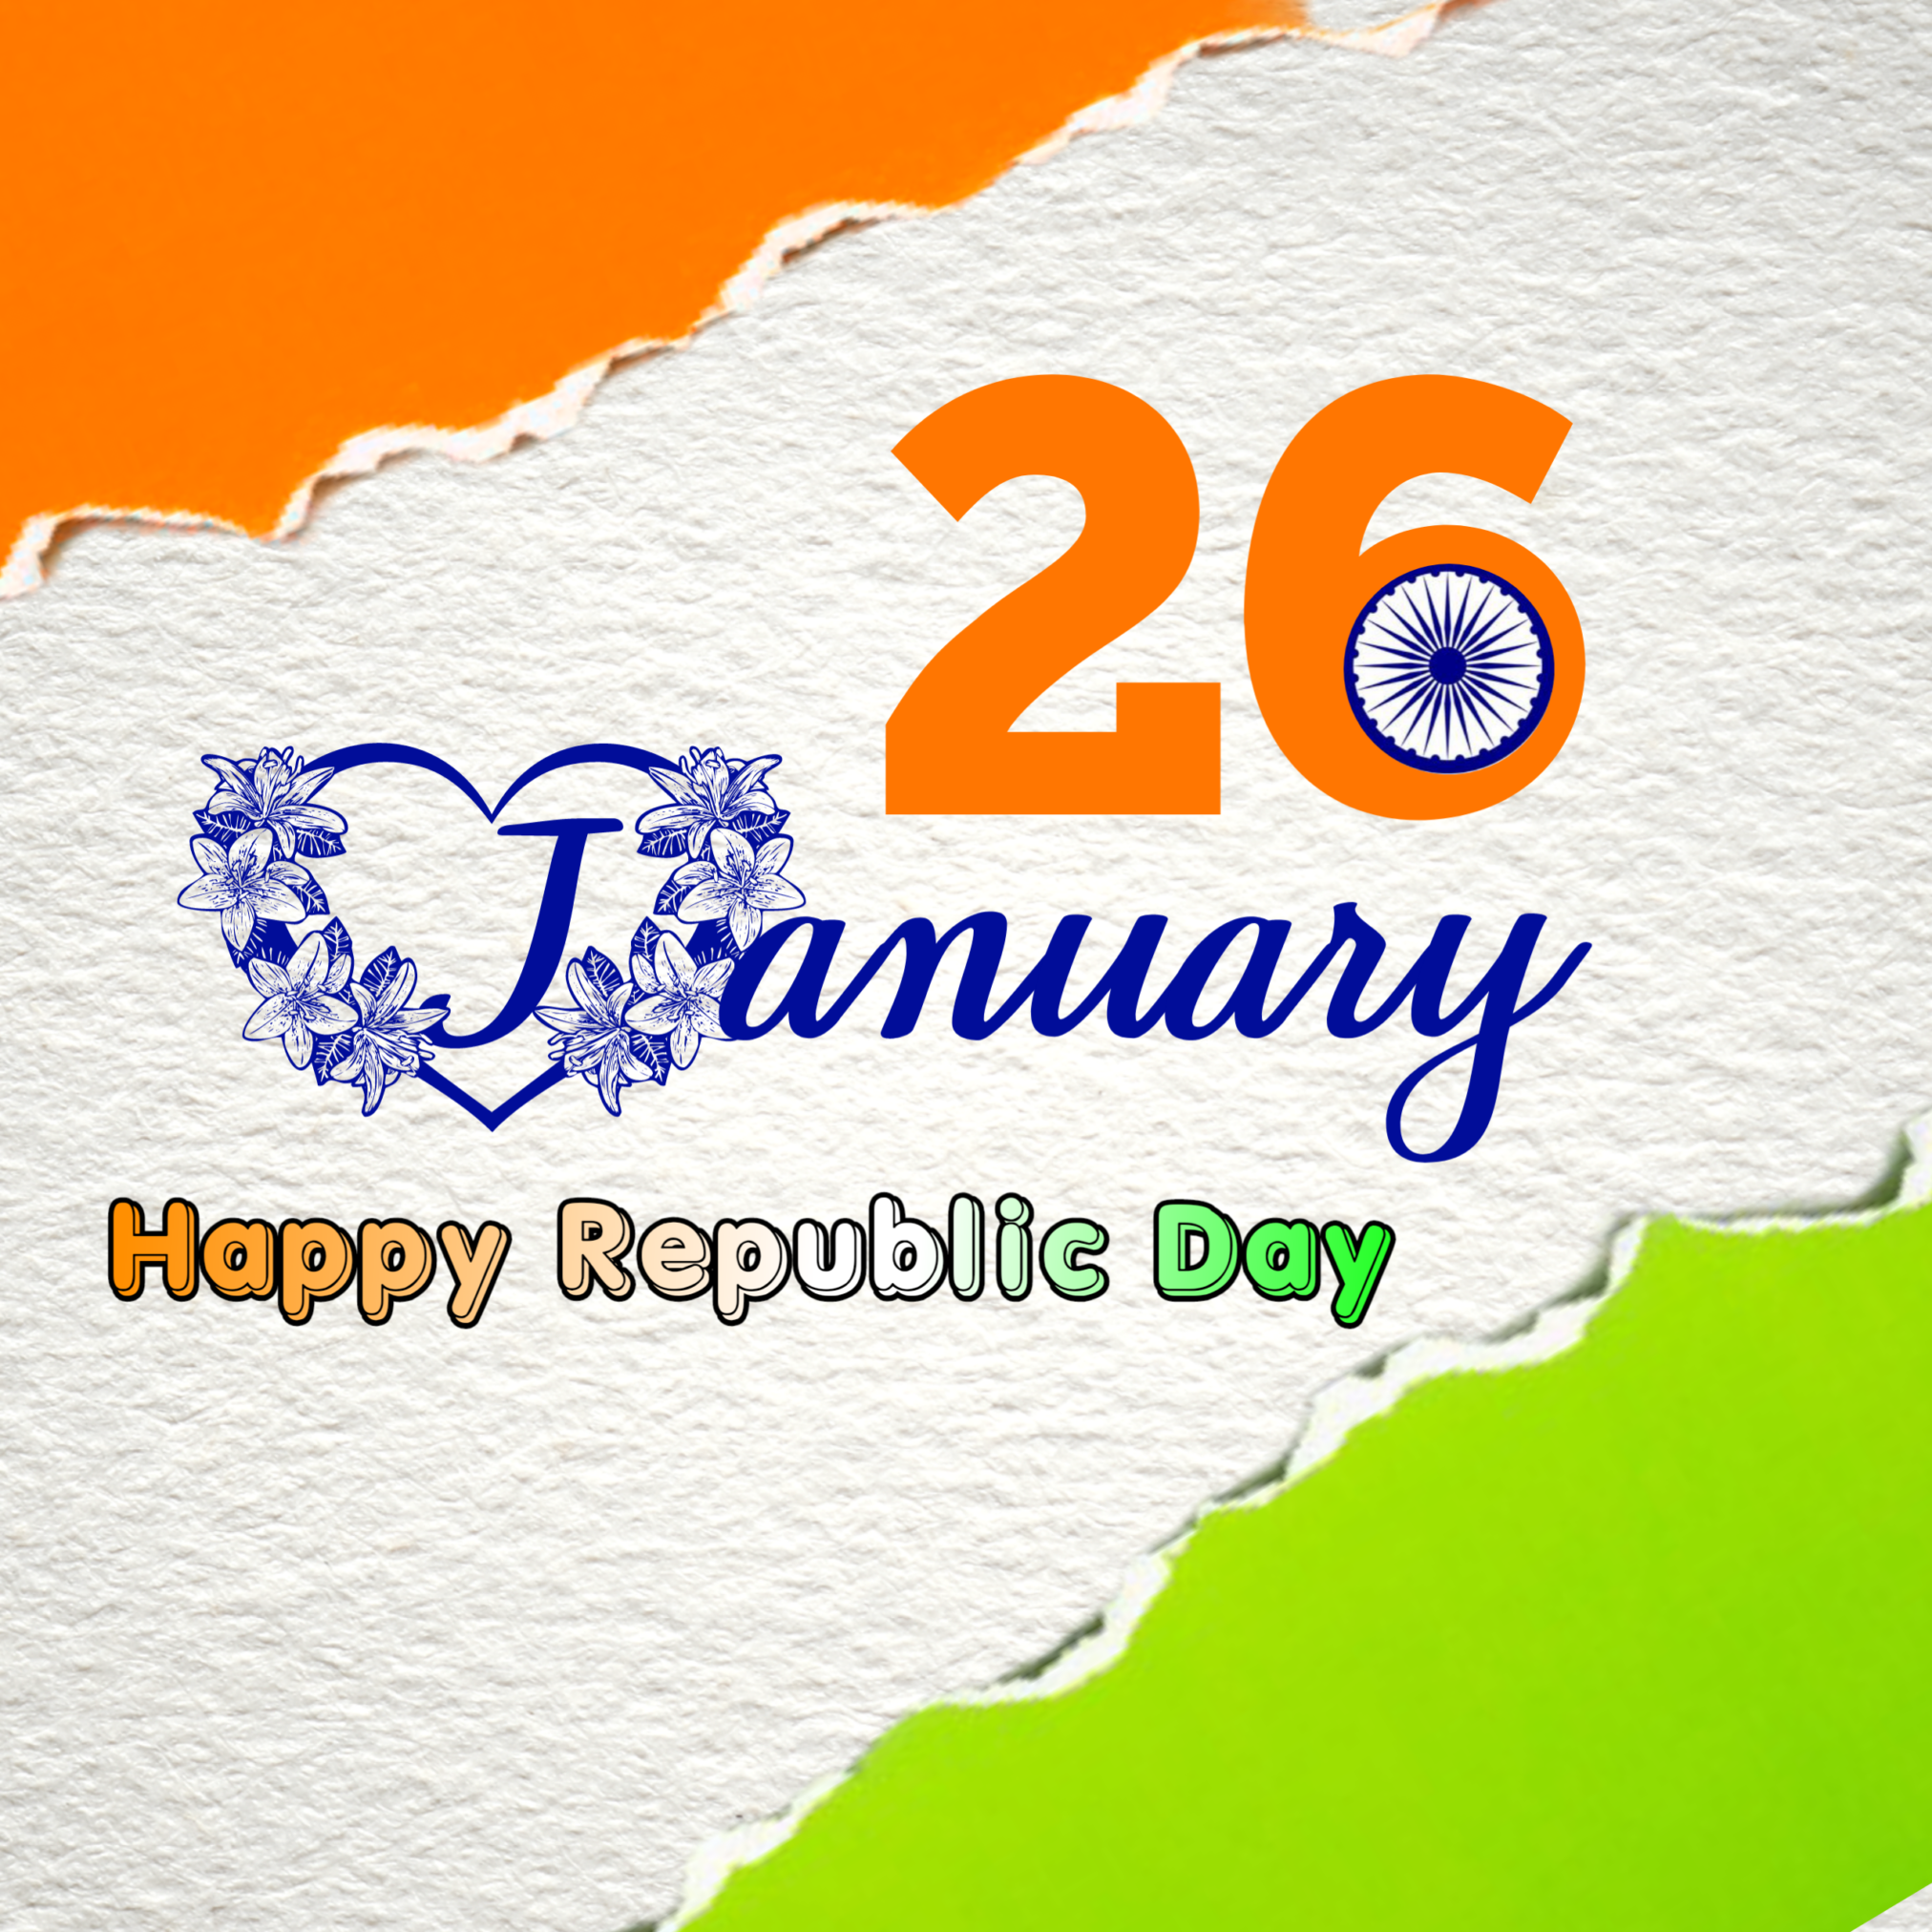 26 January Republic Day Image HD Quality